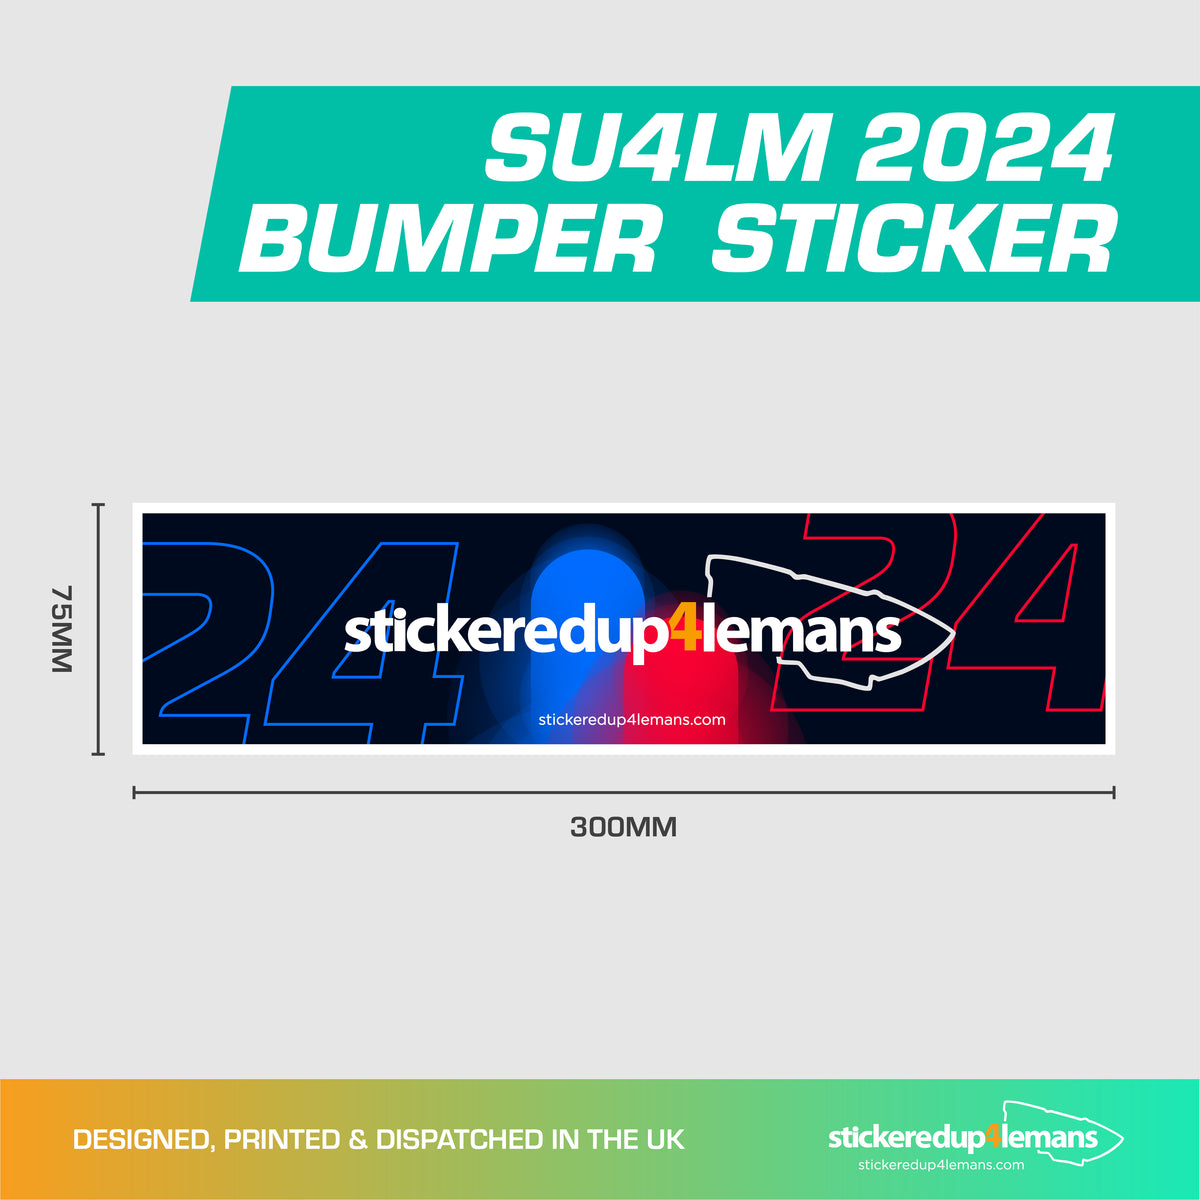 SU4LM 2024 Bumper Sticker